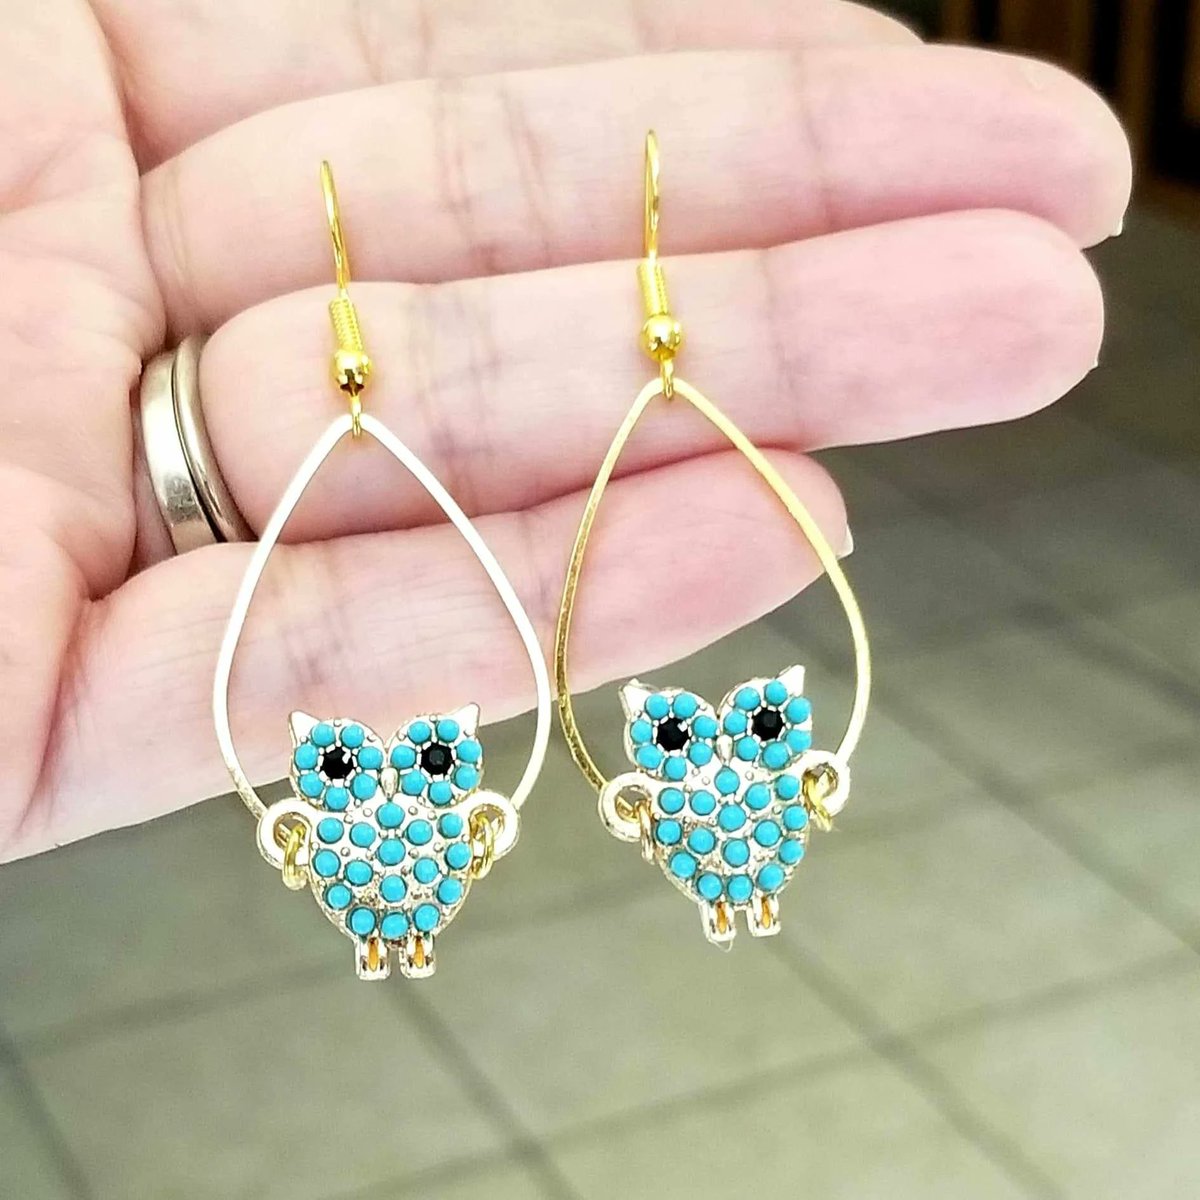 Gold Owl Earrings, Turquoise Owl Earrings, Owl Dangle Earrings  #jewelry #earrings #goldearrings #owl #owls #owljewelry #owlearrings #bird #birds #birdjewelry #giftsforher #hoopearrings #handmadejewelry #fashion #style #etsy 

etsy.me/3yh9C3c via @Etsy